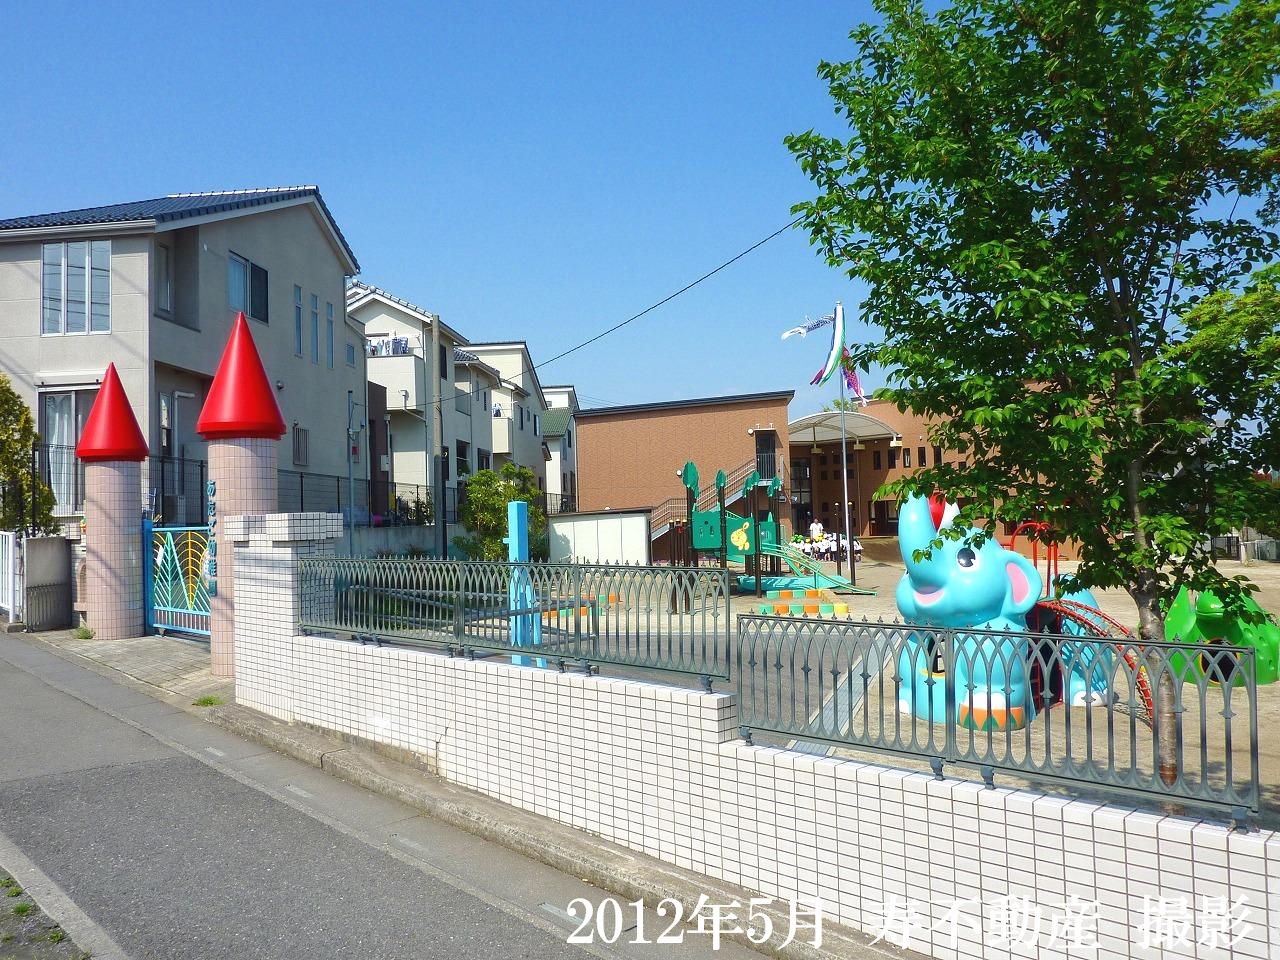 kindergarten ・ Nursery. Atago kindergarten (kindergarten ・ 797m to the nursery)